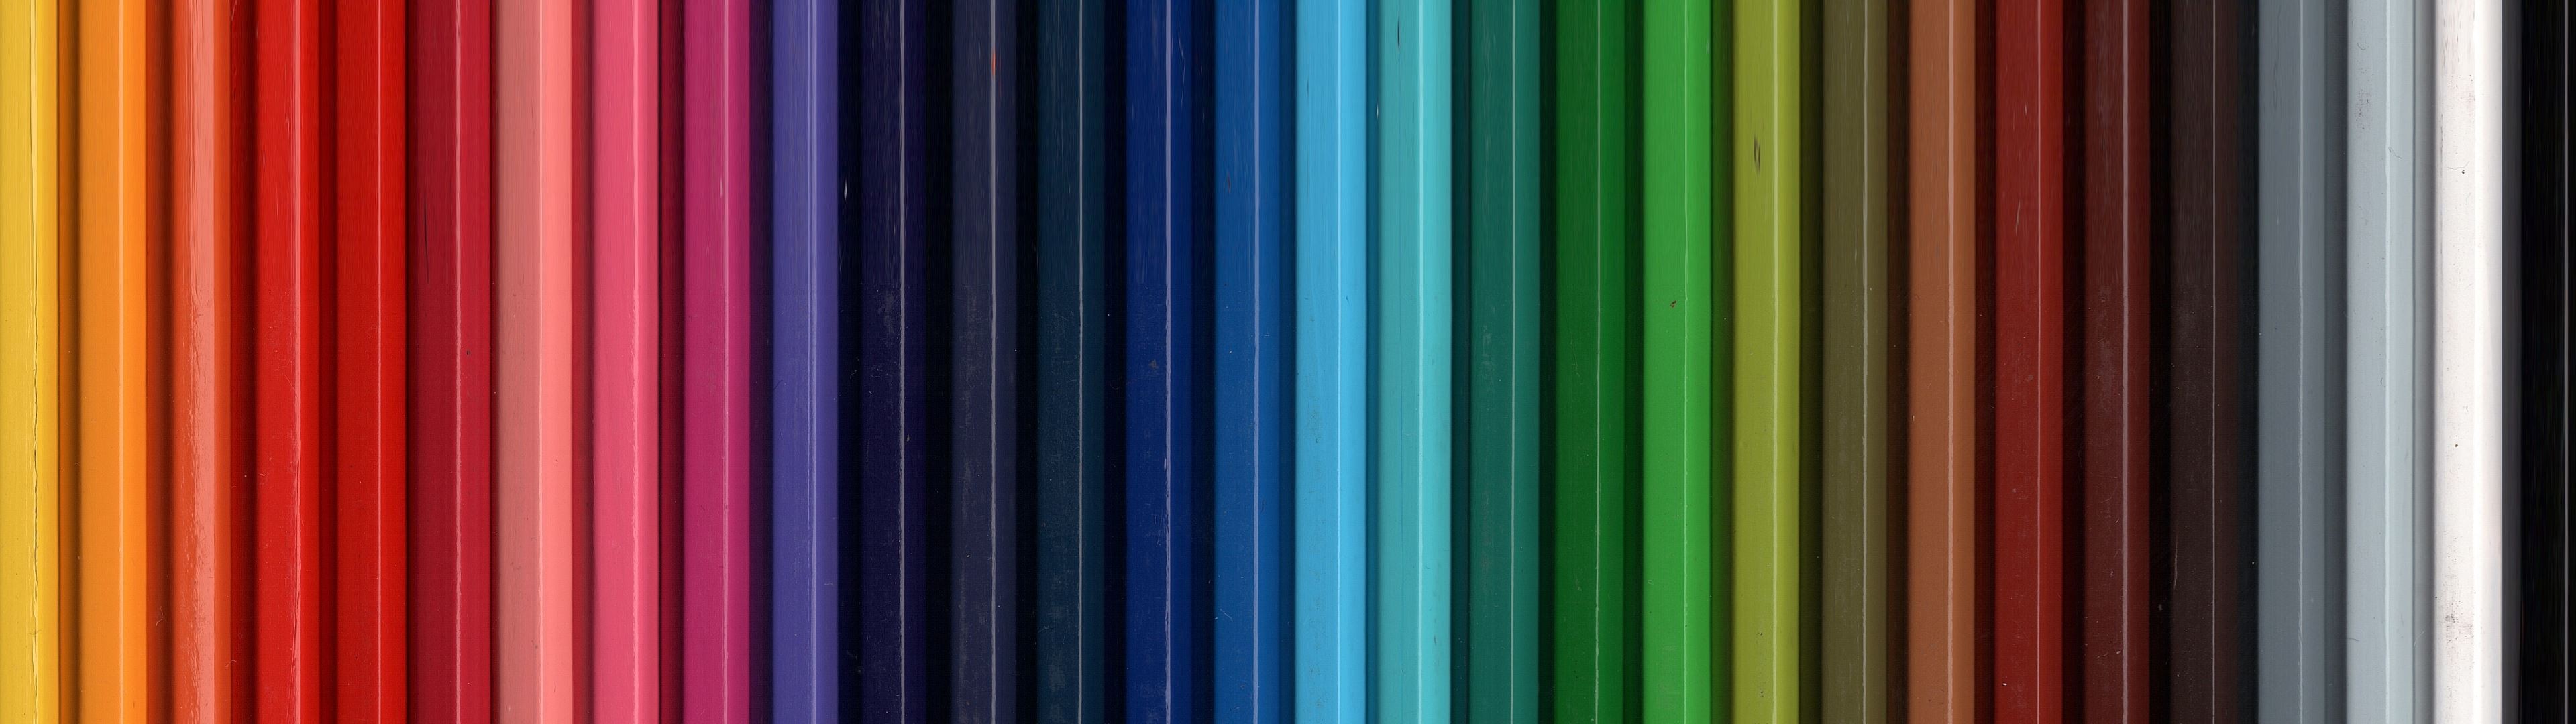 General 3840x1080 multiple display pencils colorful texture gradient